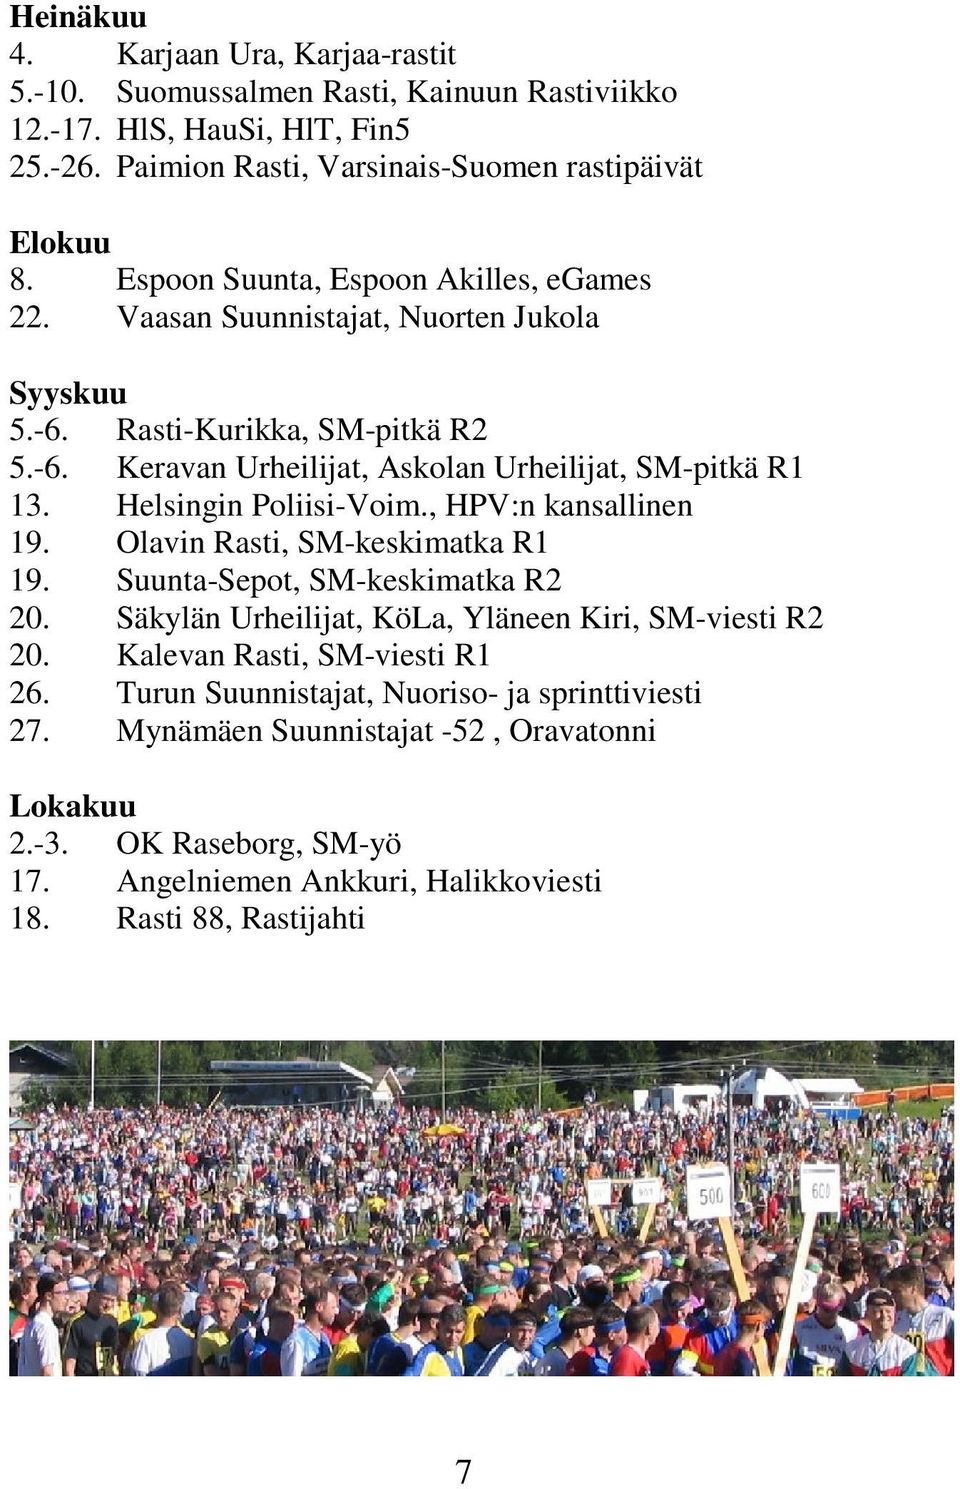 Helsingin Poliisi-Voim., HPV:n kansallinen 19. Olavin Rasti, SM-keskimatka R1 19. Suunta-Sepot, SM-keskimatka R2 20. Säkylän Urheilijat, KöLa, Yläneen Kiri, SM-viesti R2 20.